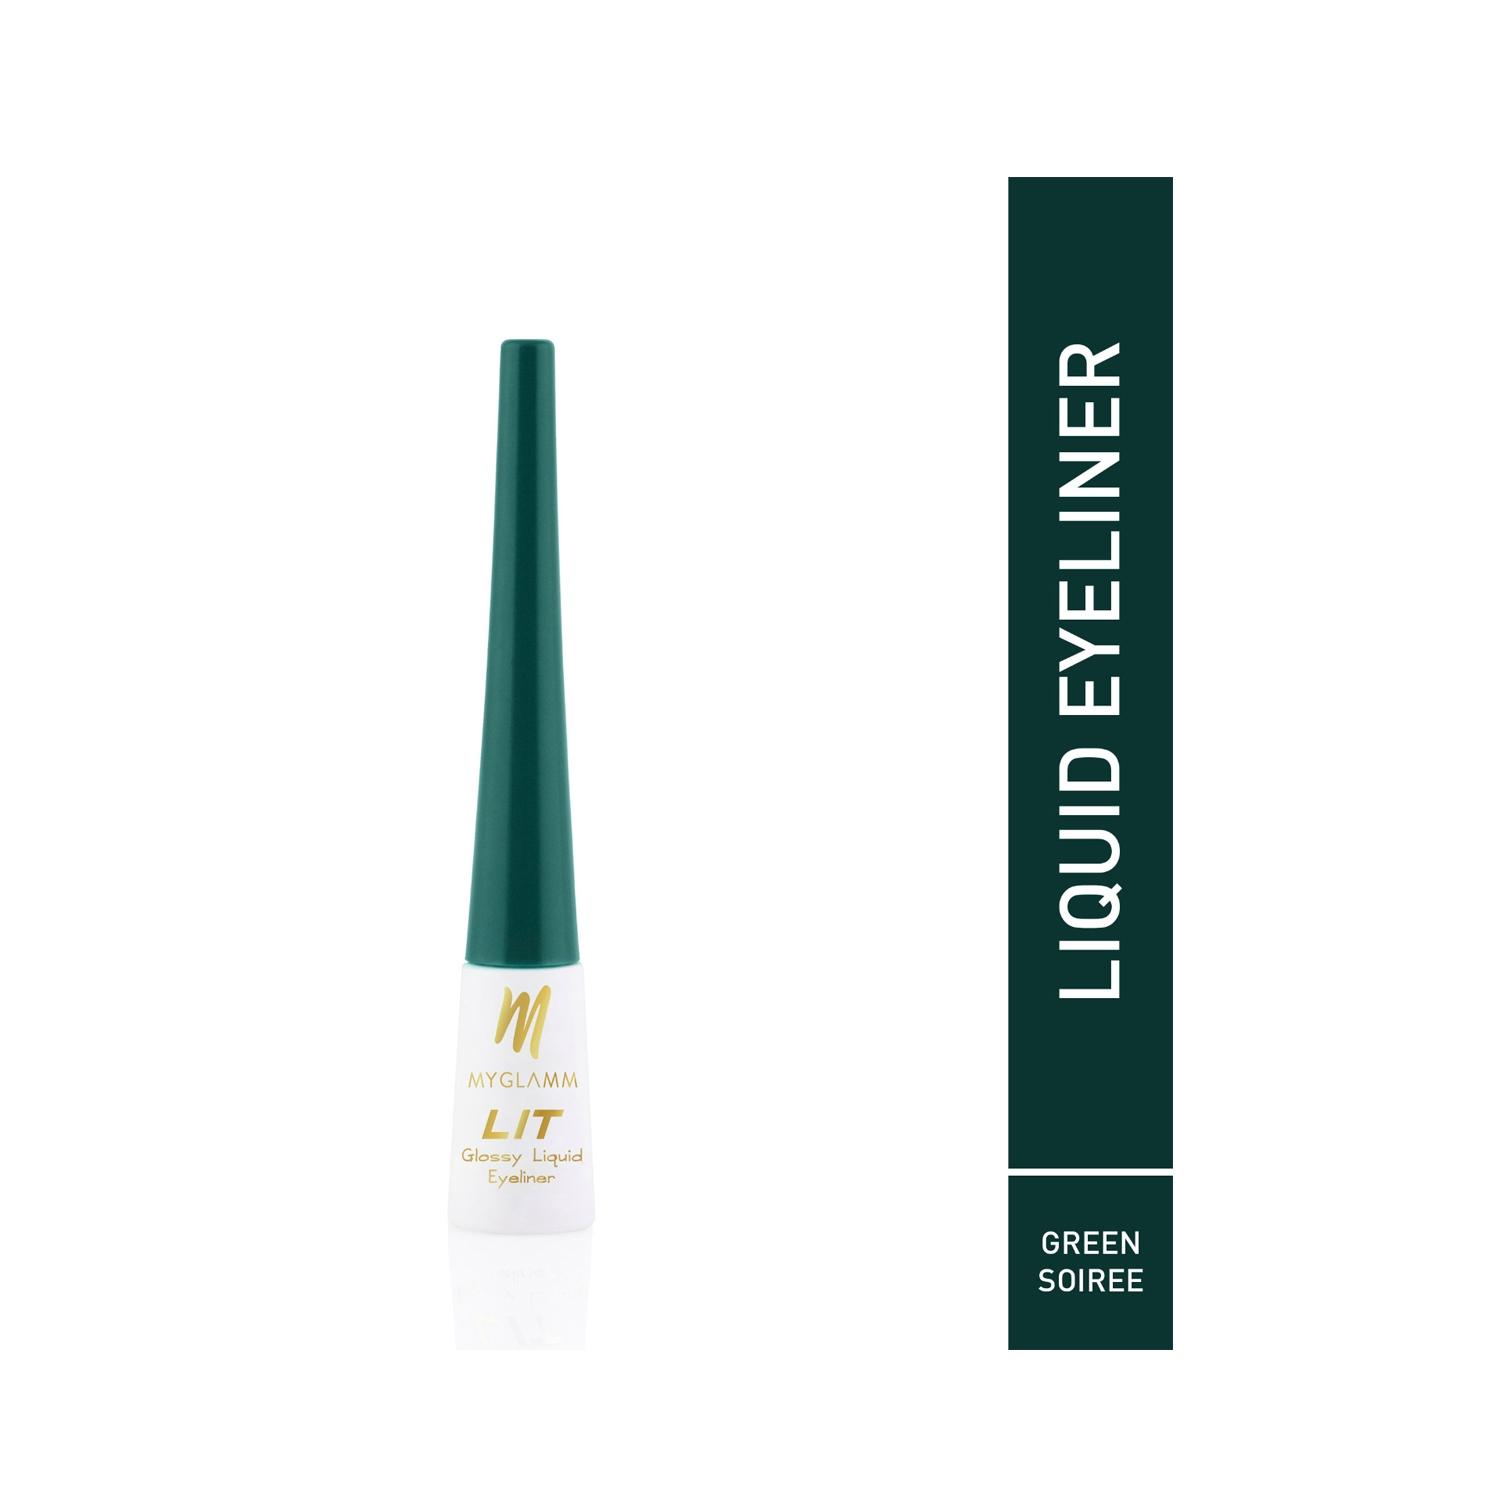 Myglamm LIT Glossy Liquid Eyeliner - Green Soiree (3.5ml)